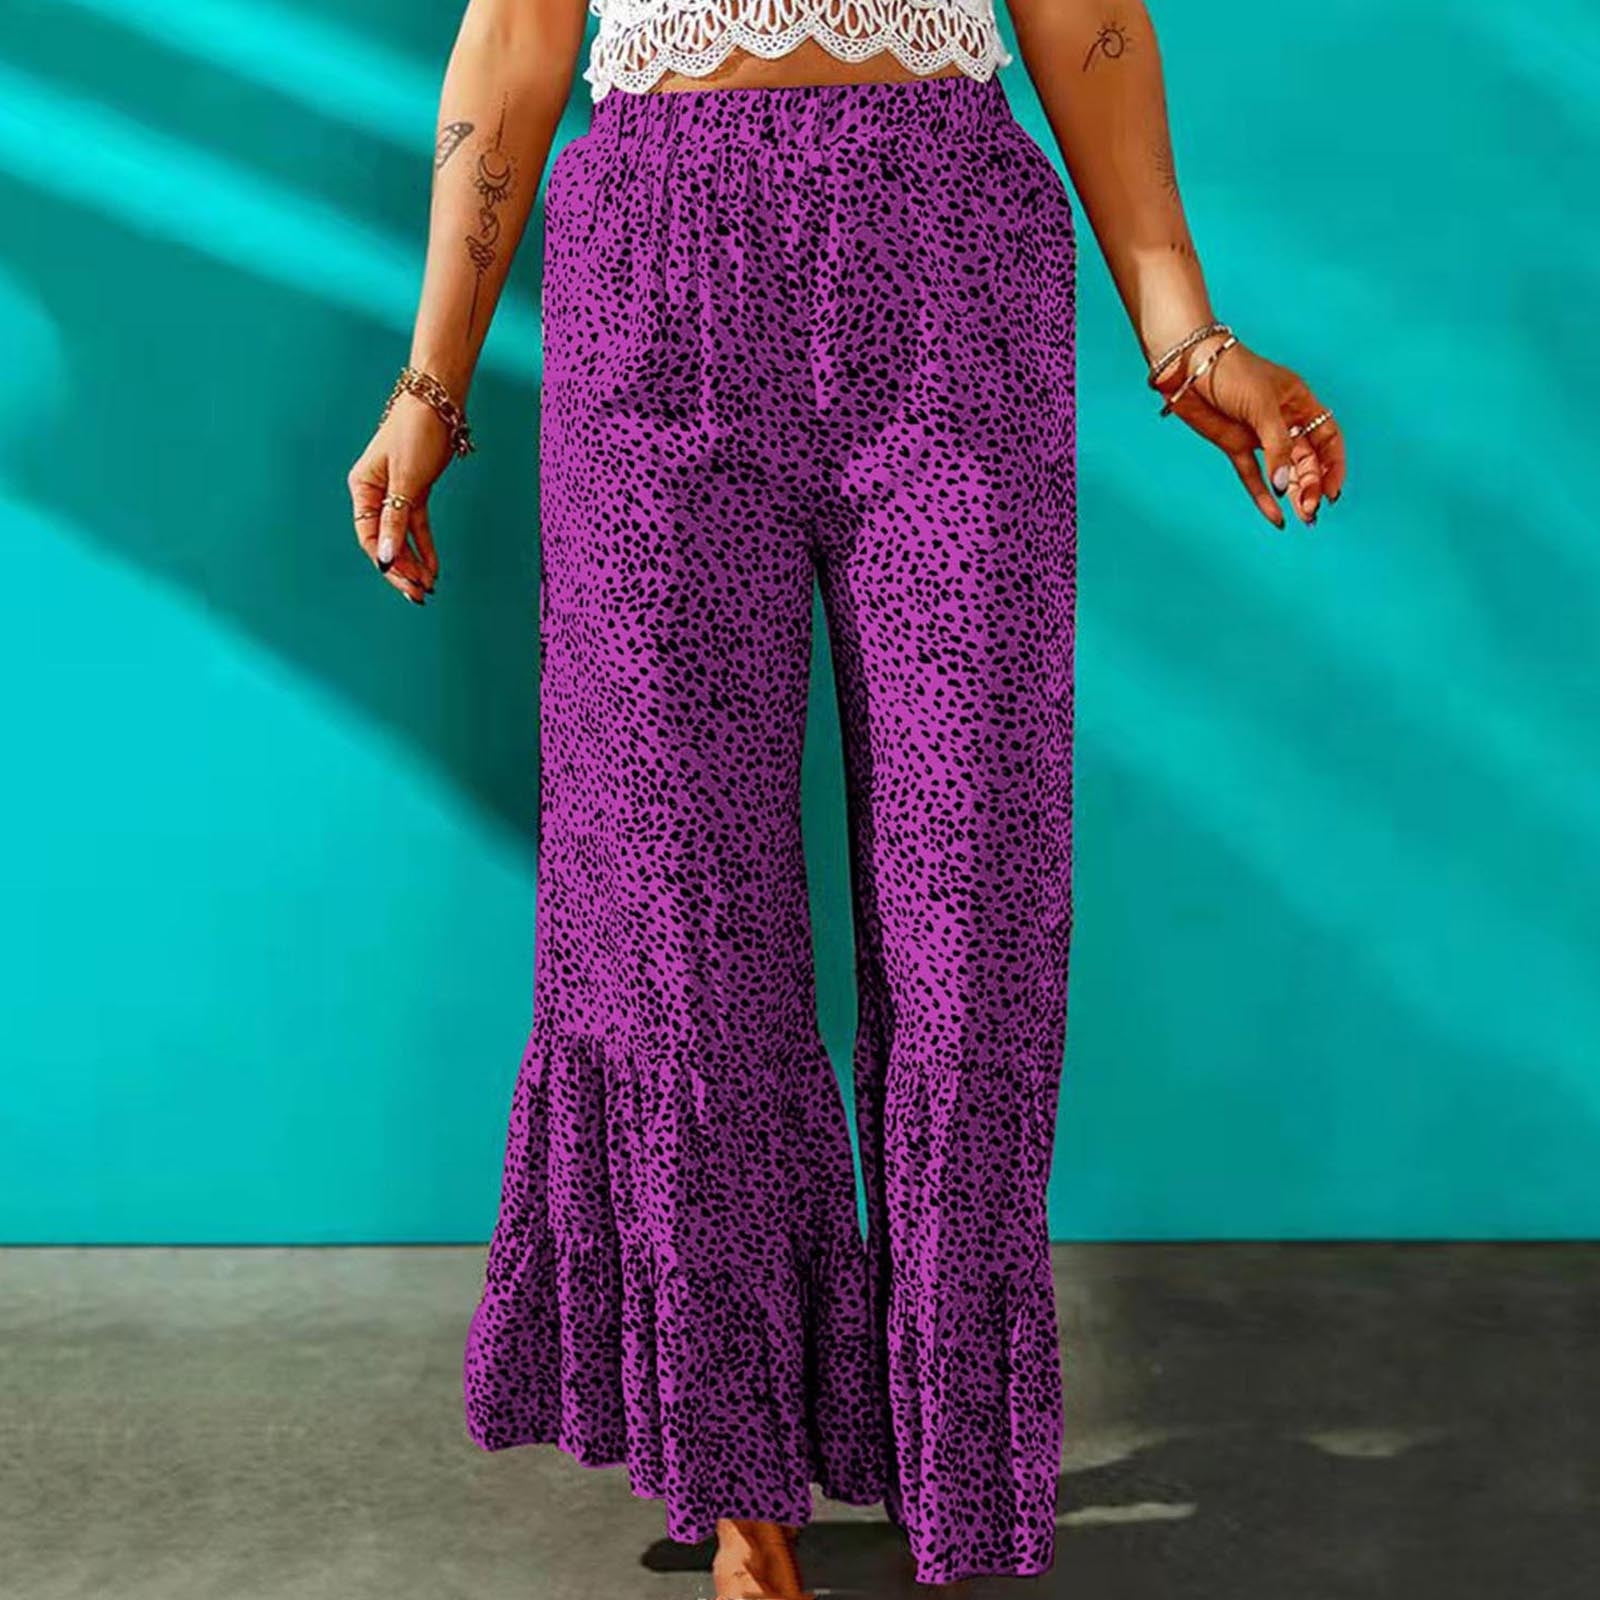 HOMBOM Youth Baseball Pants,Summer Fashion Loose High Waist Pleated Wide Printing Trousers Pants Purple XXXL(14)